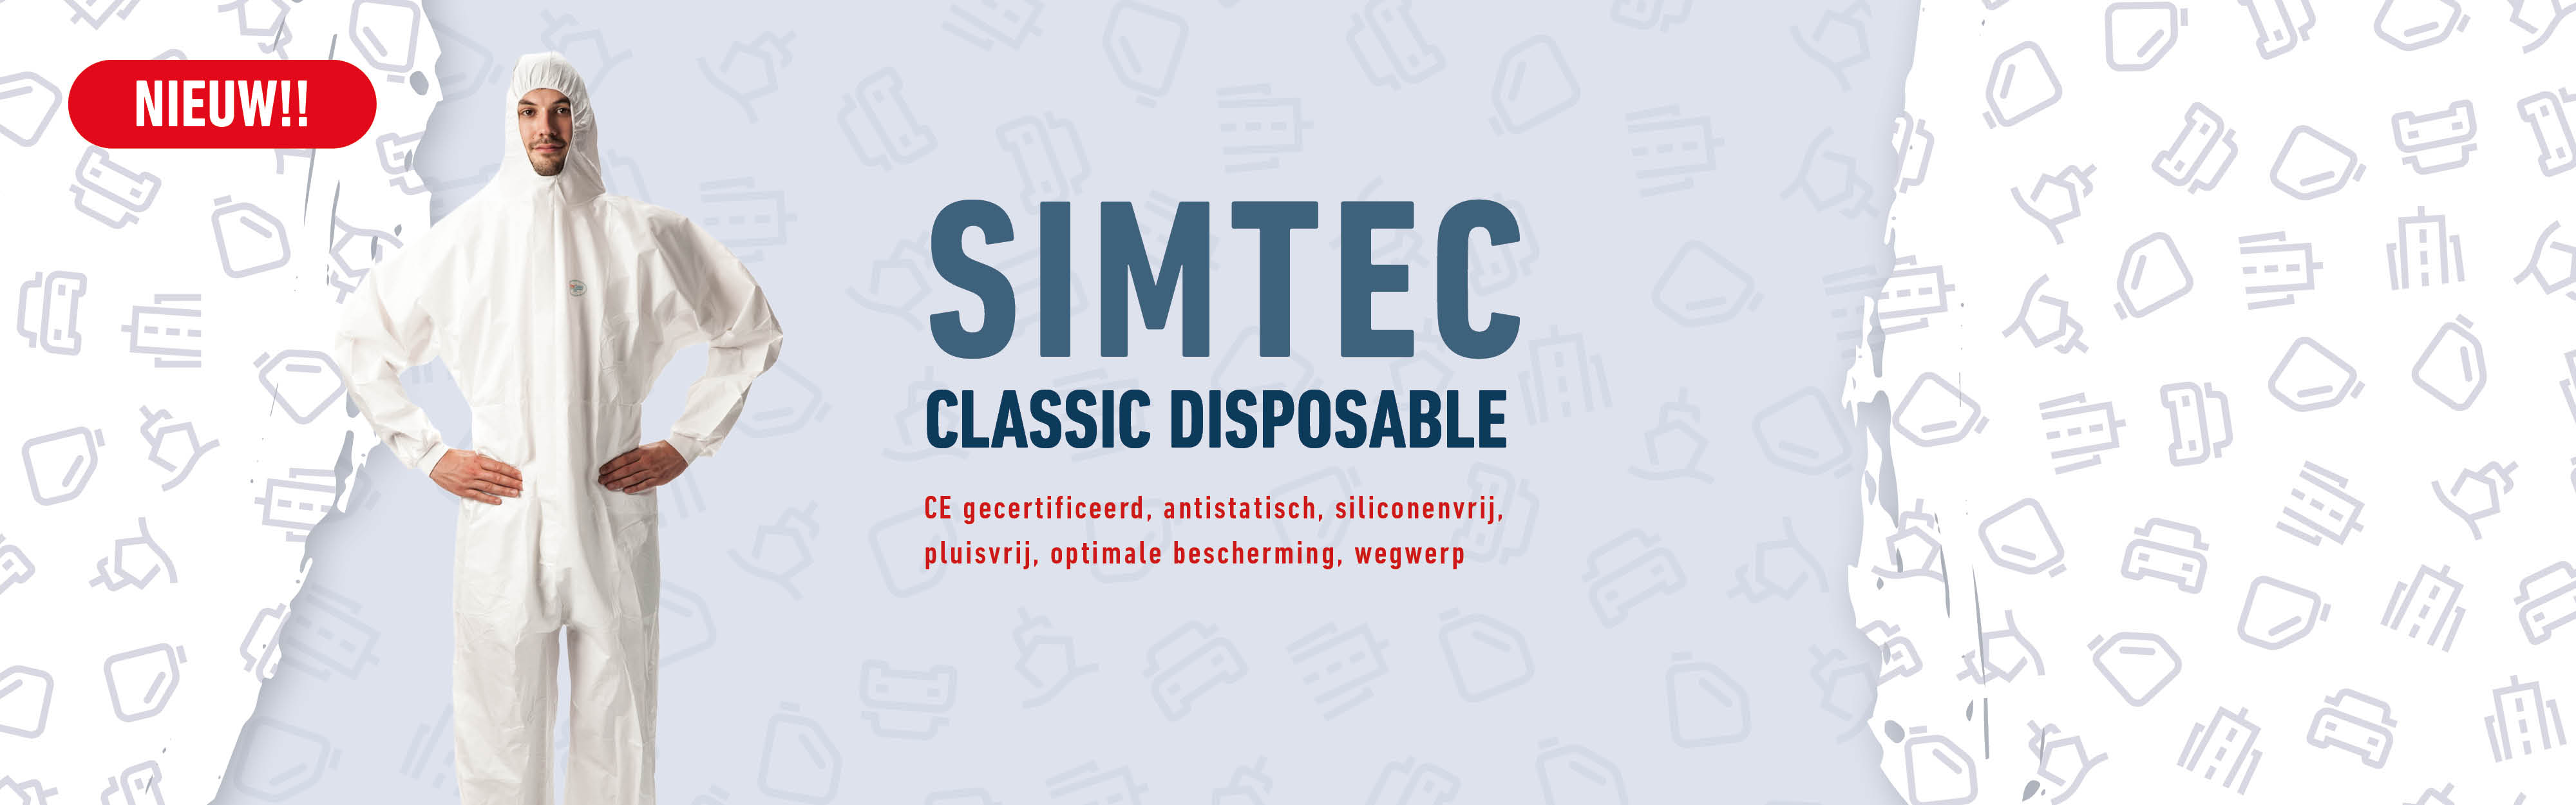 Pelatec Simtec Classic Disposable Coverall